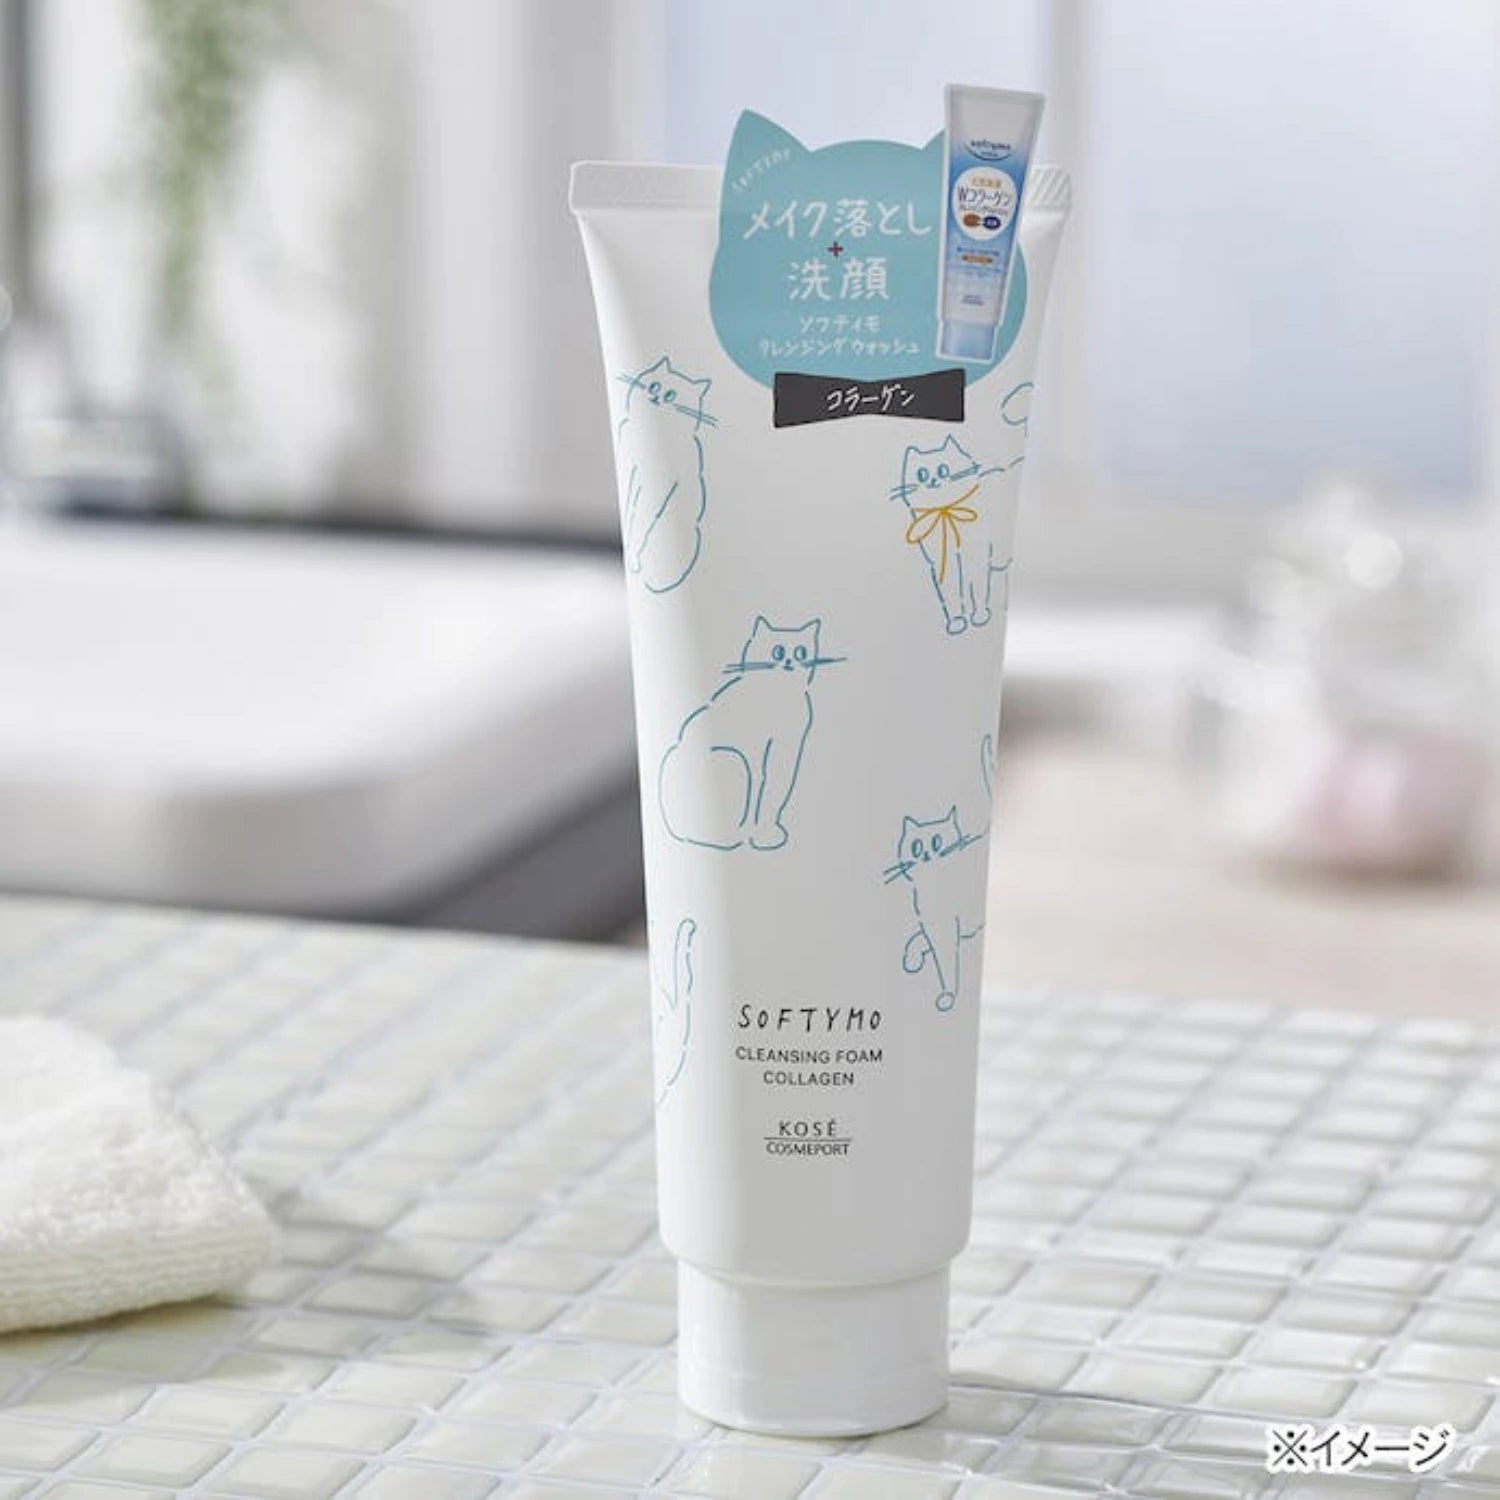 Kose Softymo Collagen Cleansing Foam 220g - Buy Me Japan